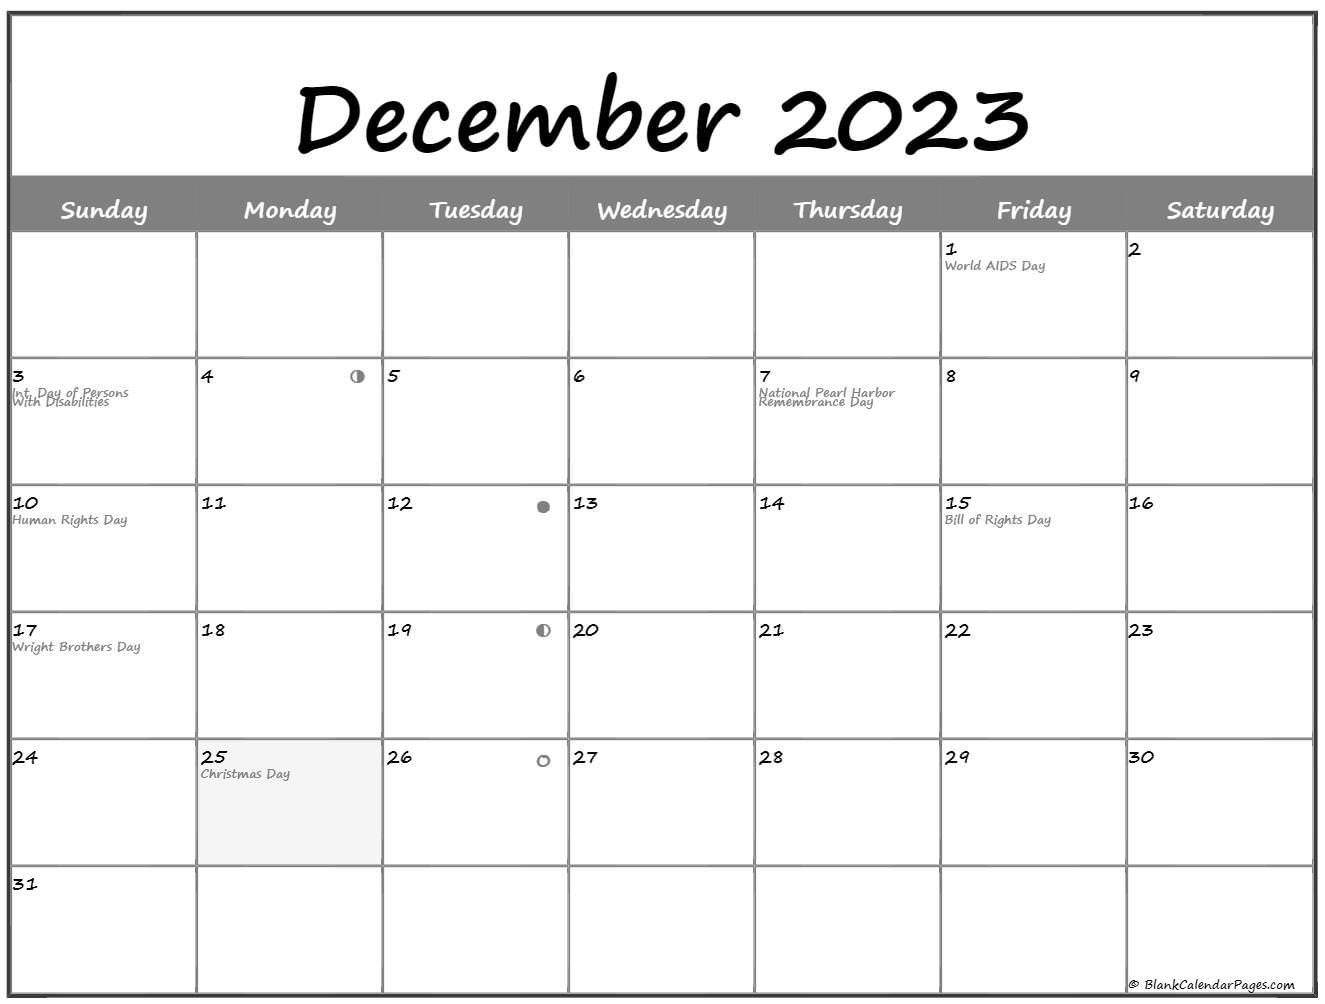 December 2023 Lunar Calendar | Moon Phase Calendar